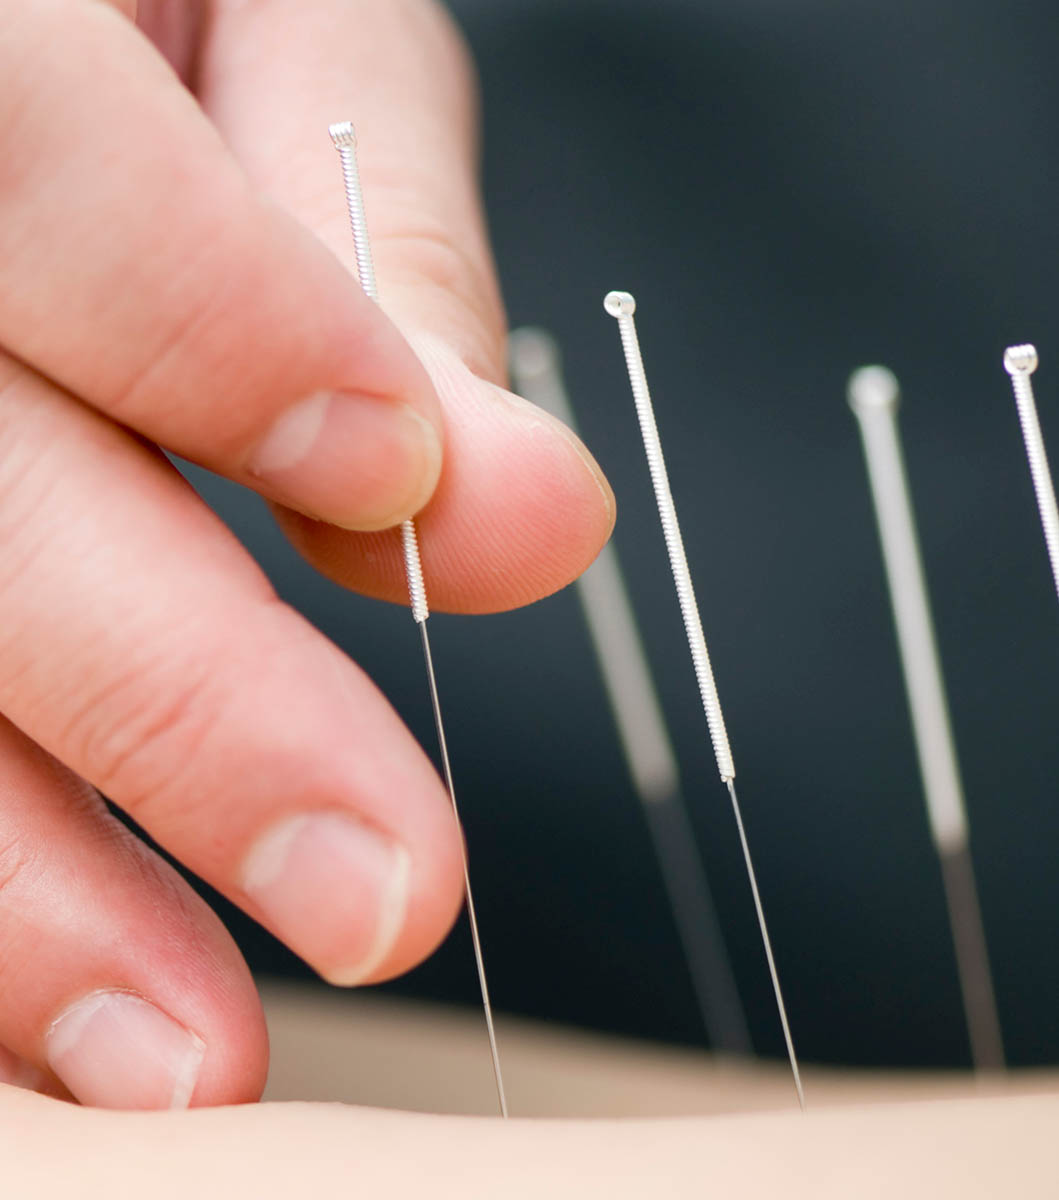 TCM acupuncture treatment